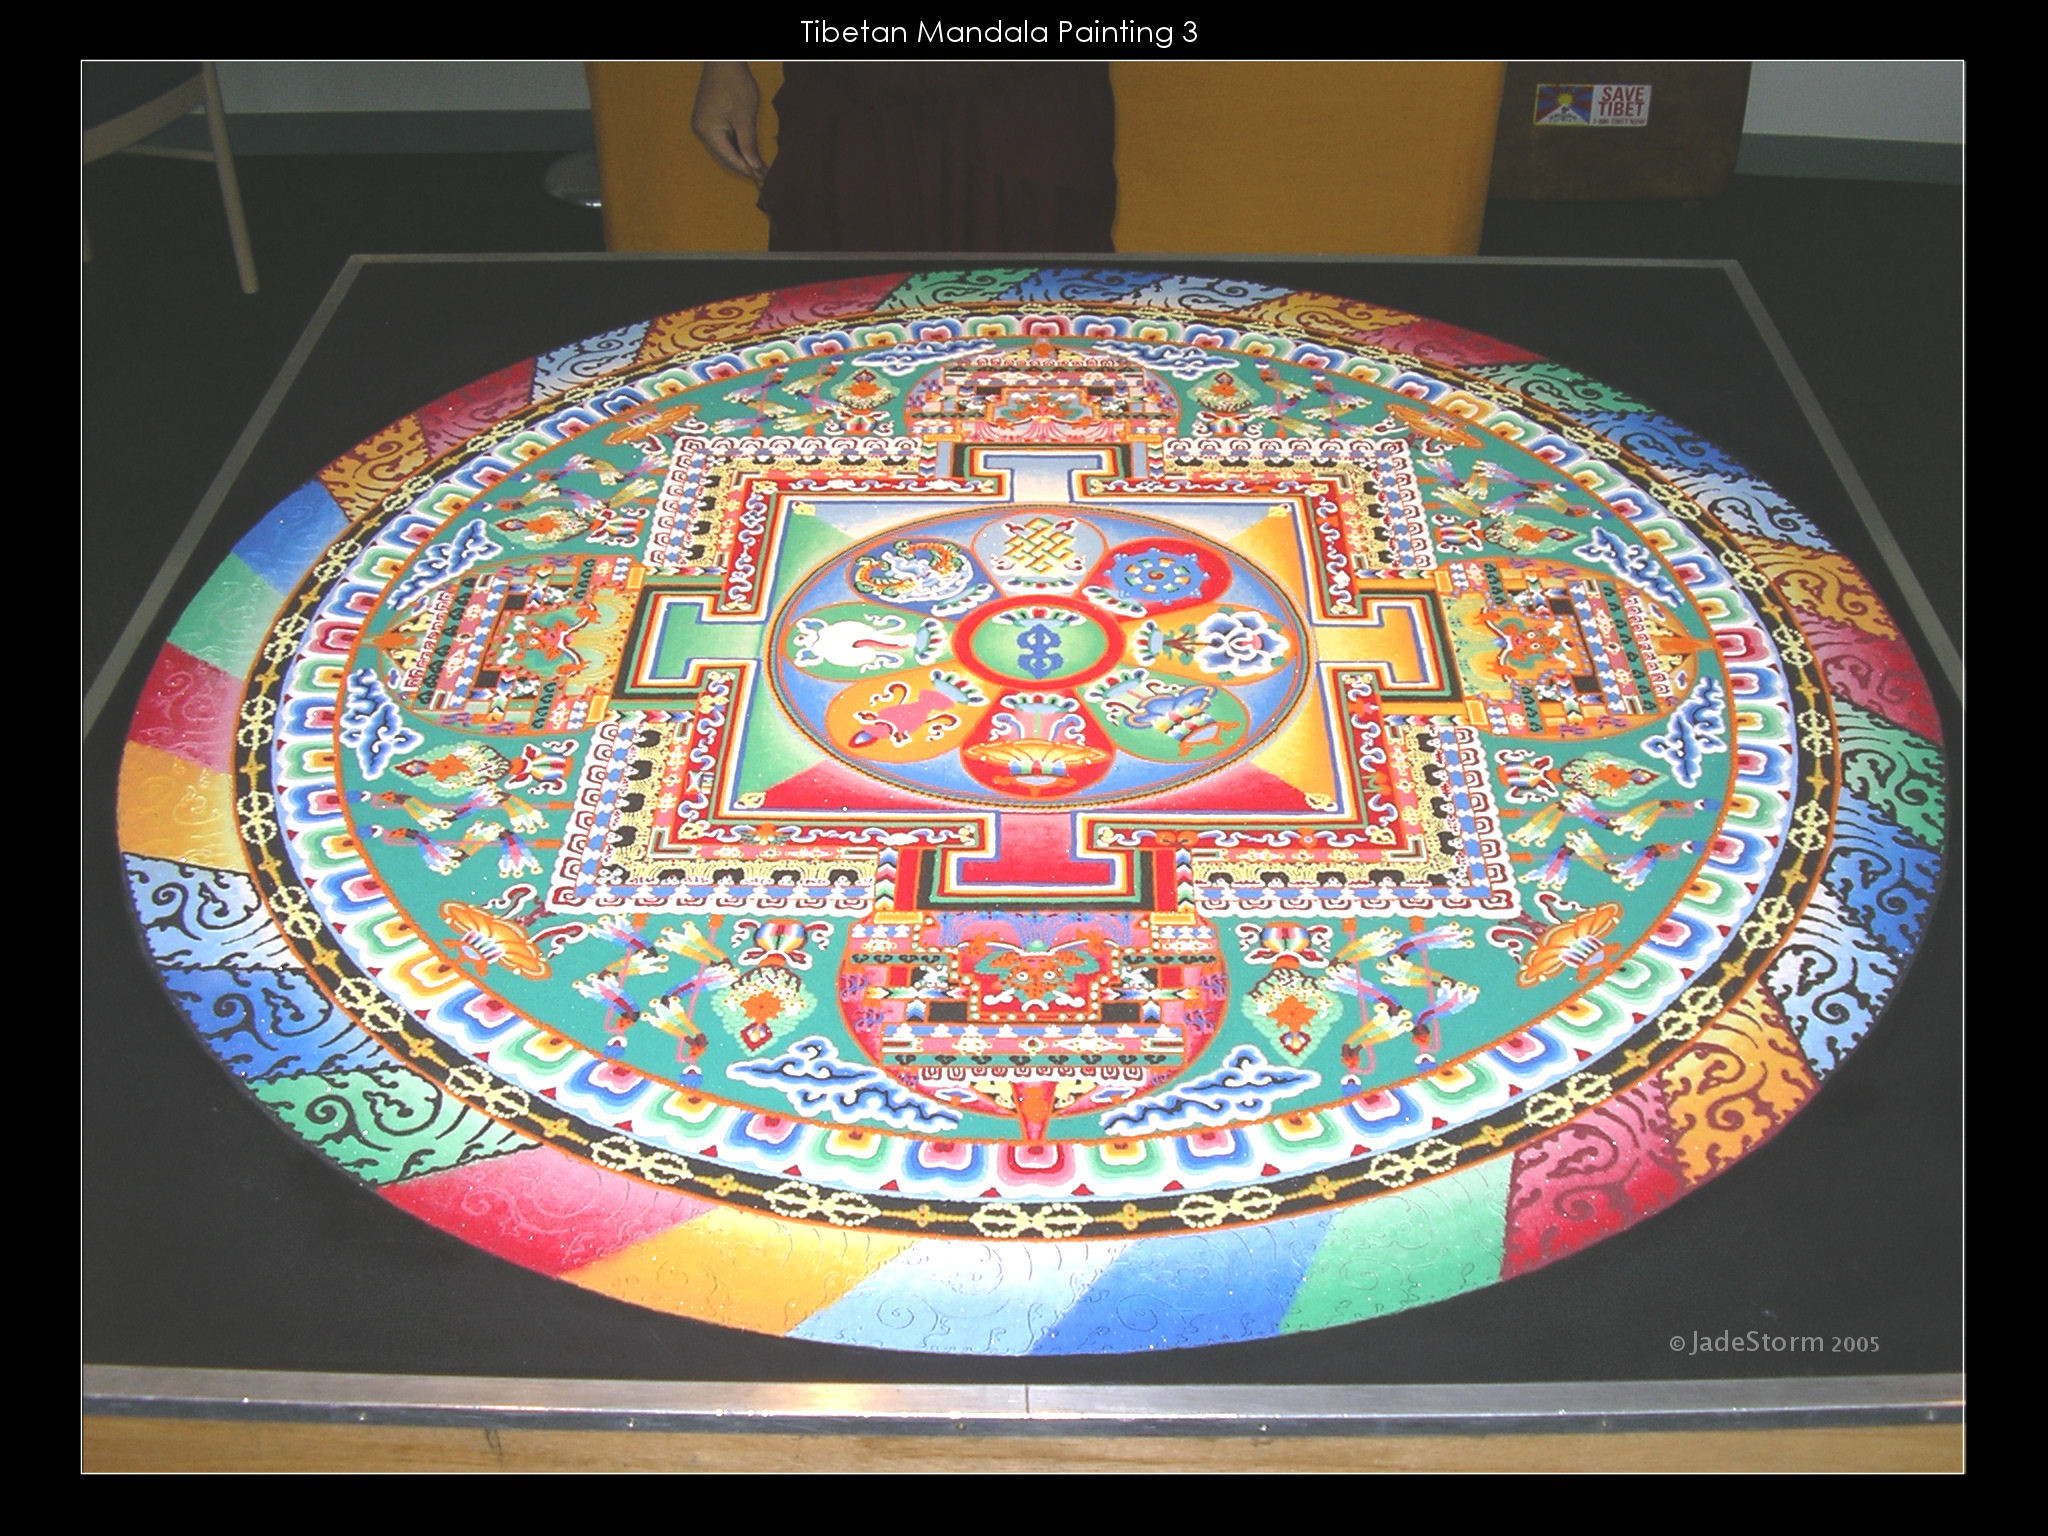 Tibetan Mandala Painting 3 By Jadest0rm Tibetan Mandala Painting 3 By Jadest0rm 2048x1536